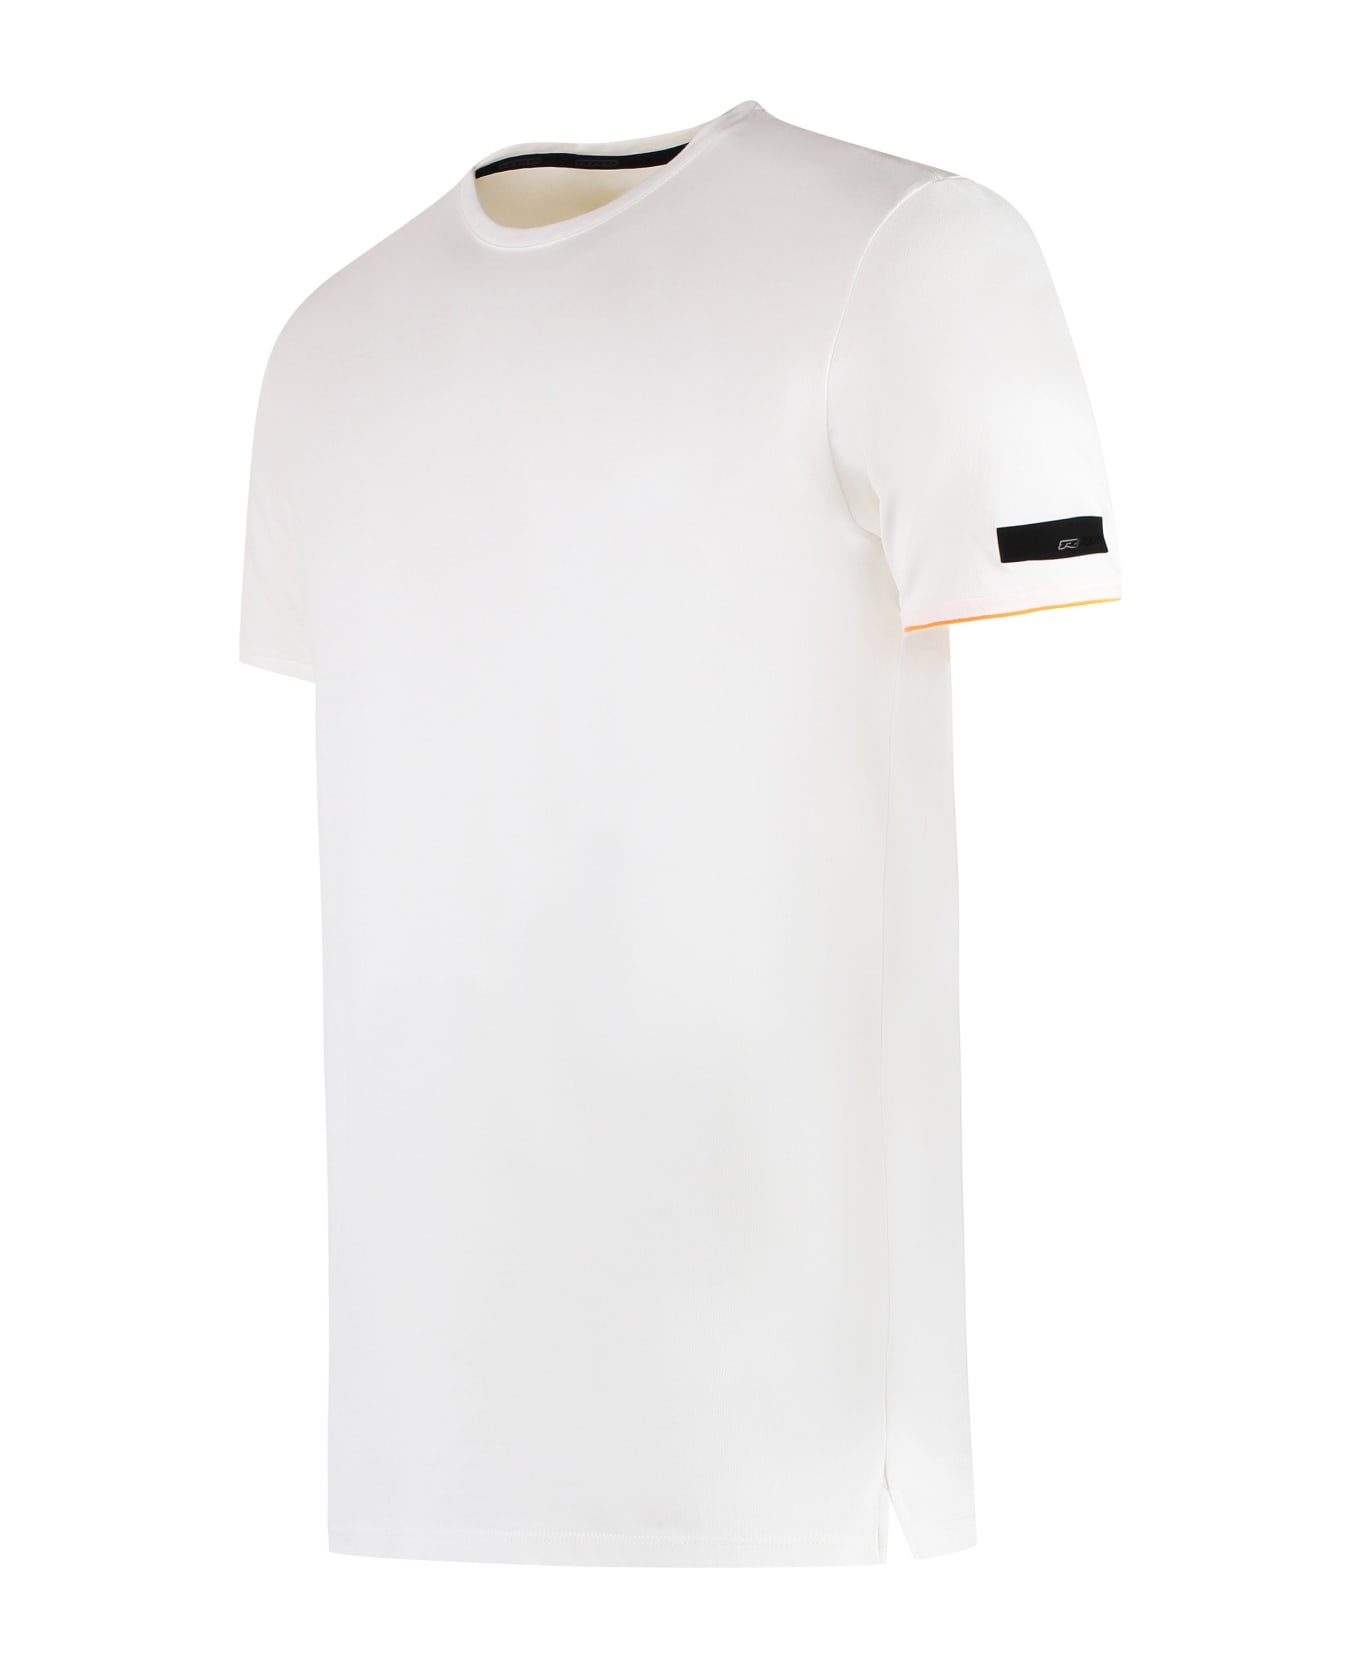 RRD - Roberto Ricci Design Cotton Blend T-shirt - White